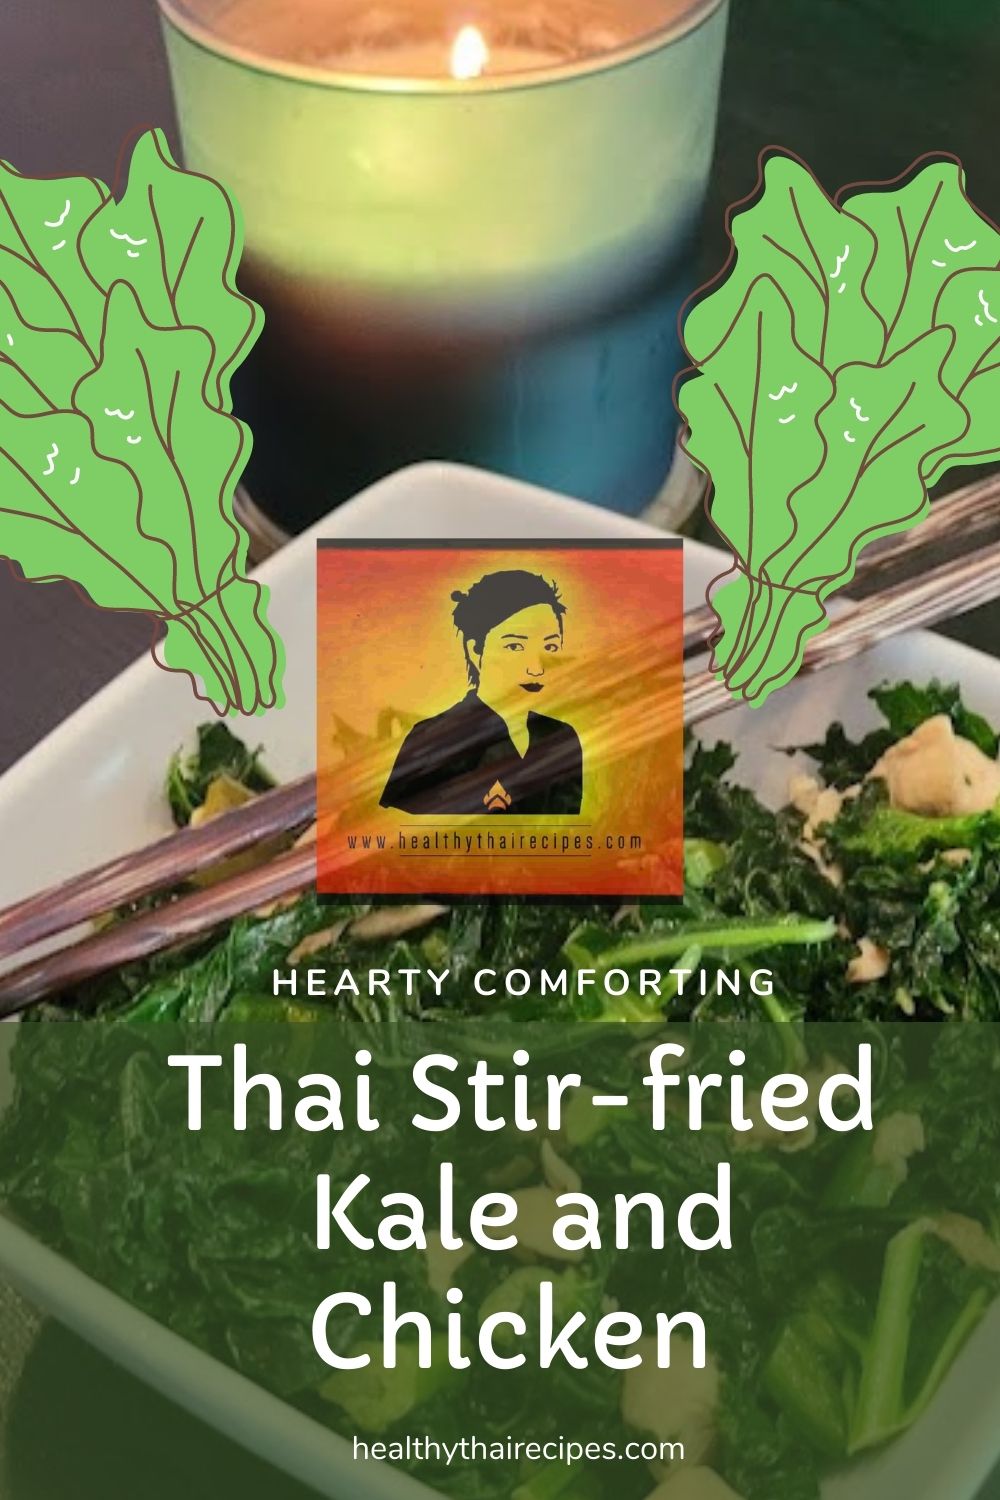 Thai-Stir-fried-Kale-and-Chicken Pinterest Image